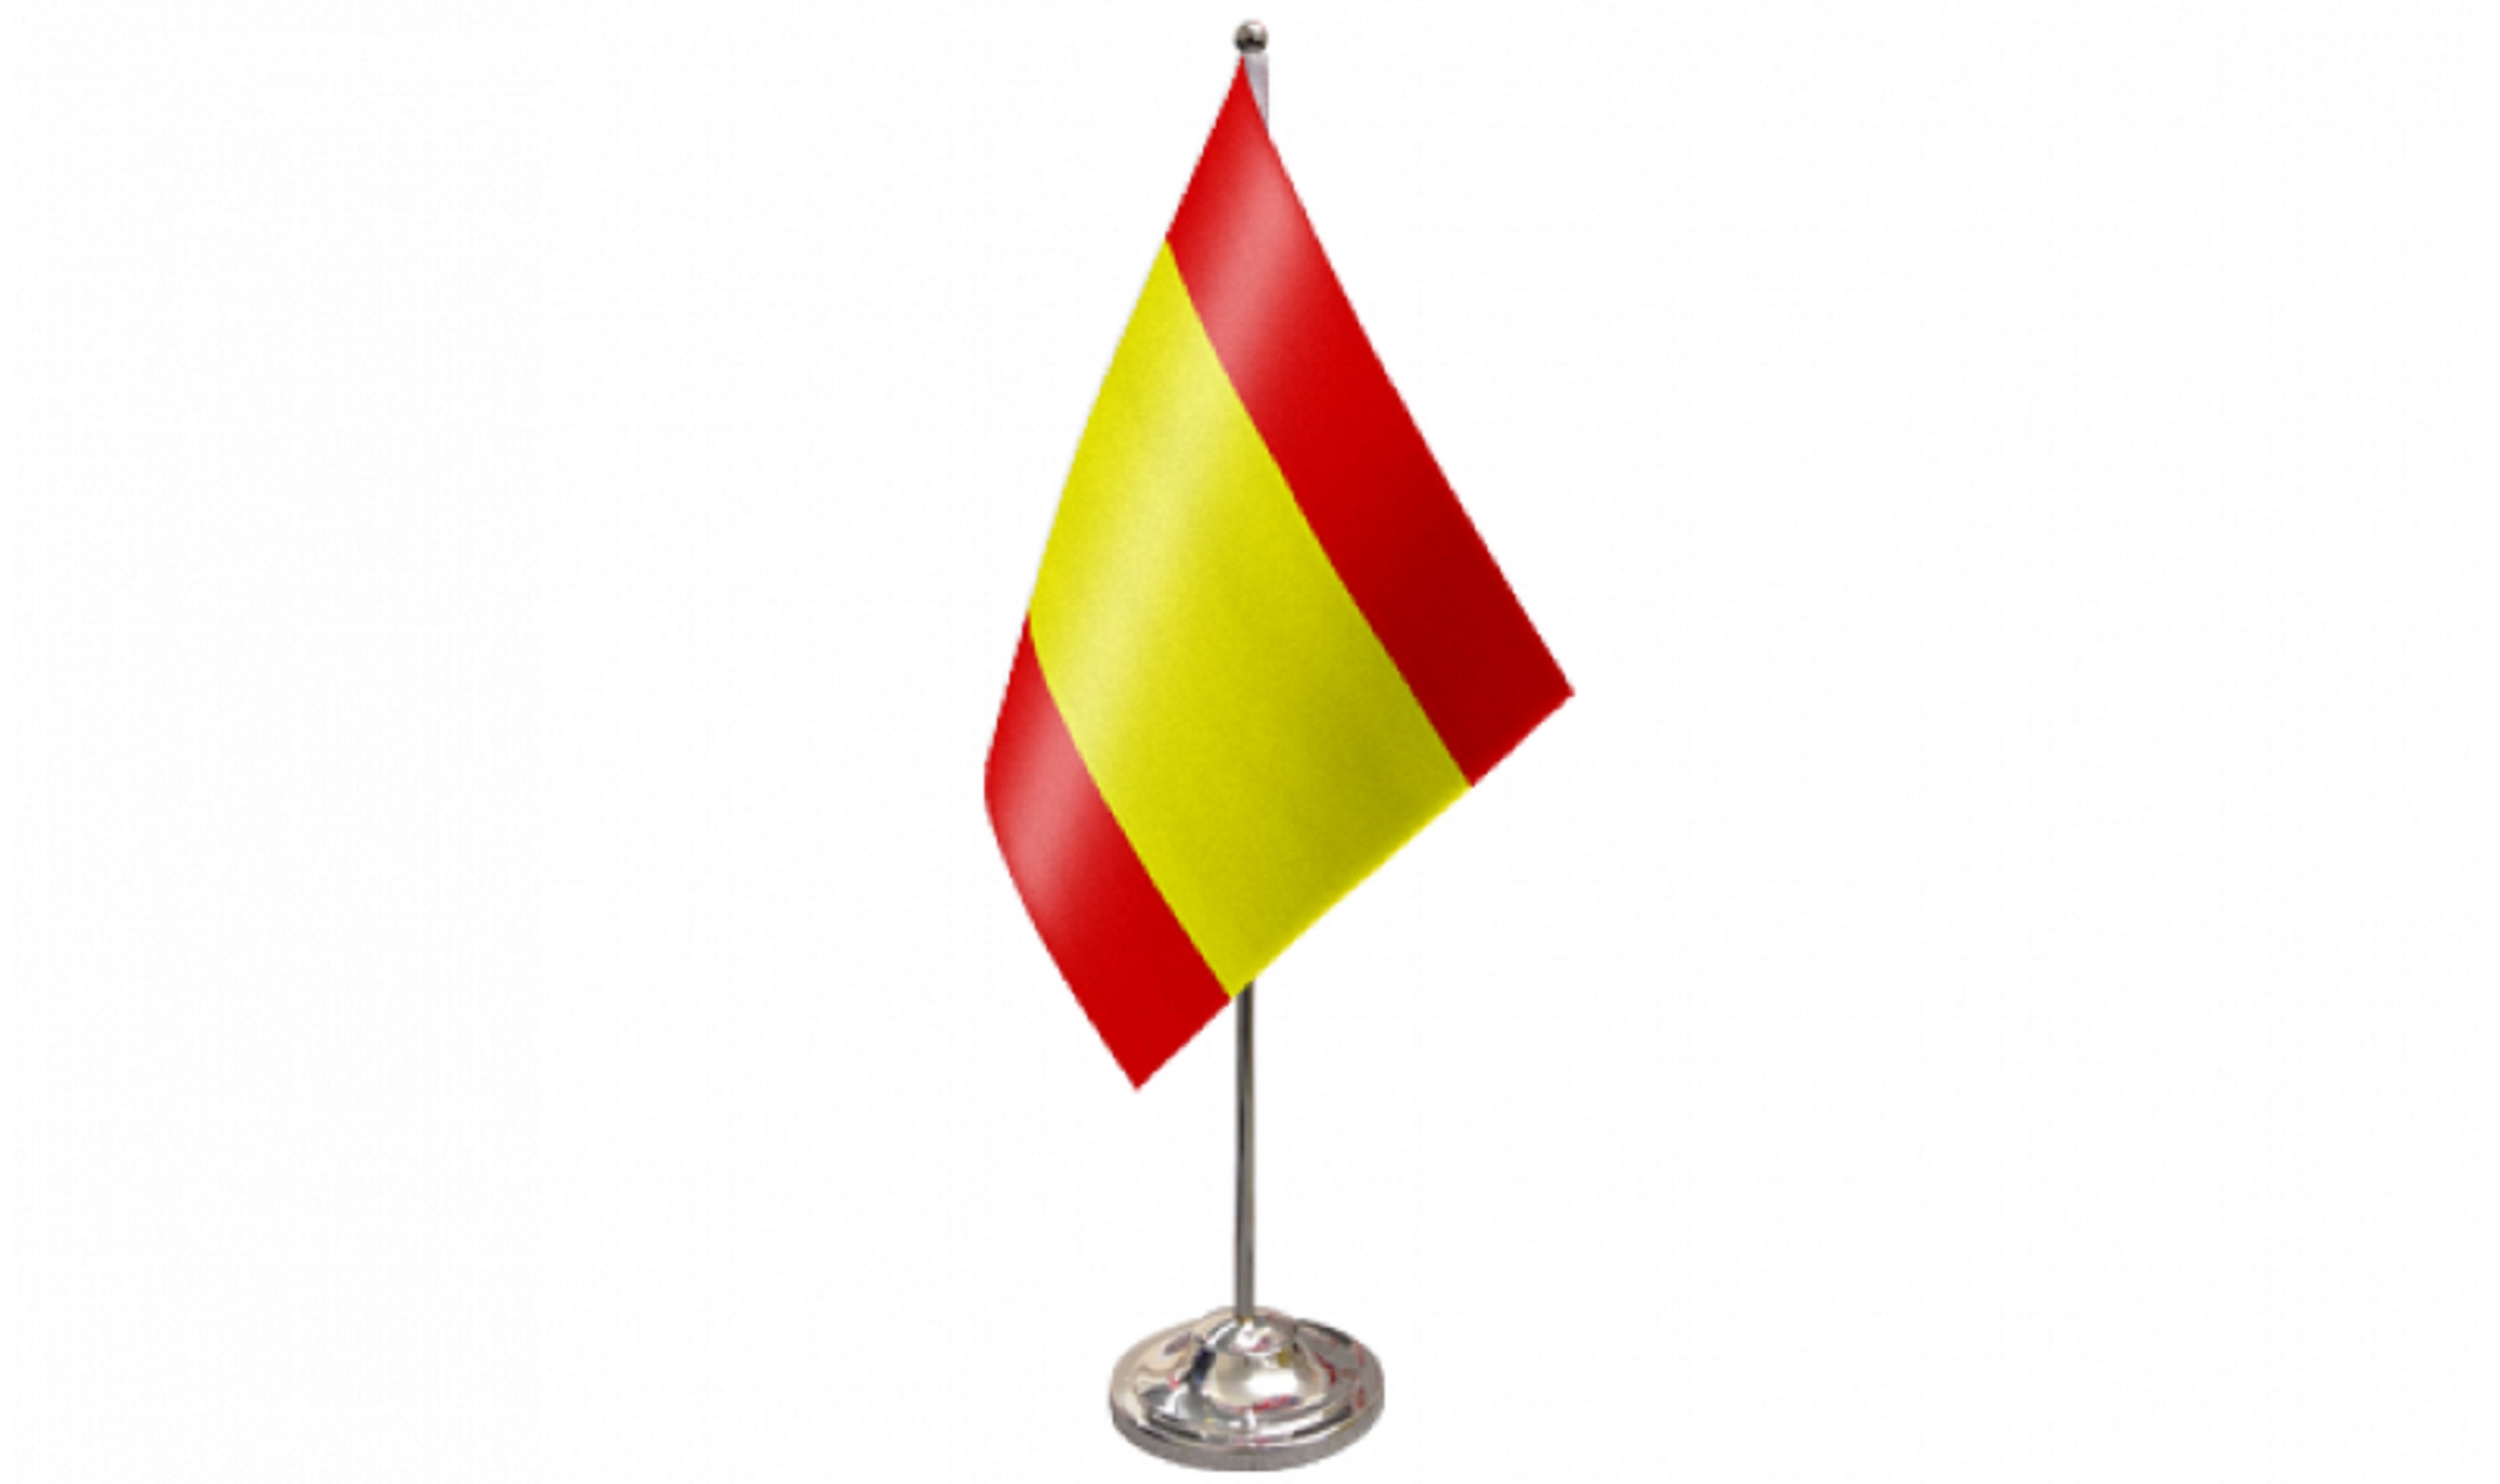 Bandera de España Sin Escudo en Satén de Alta Calidad